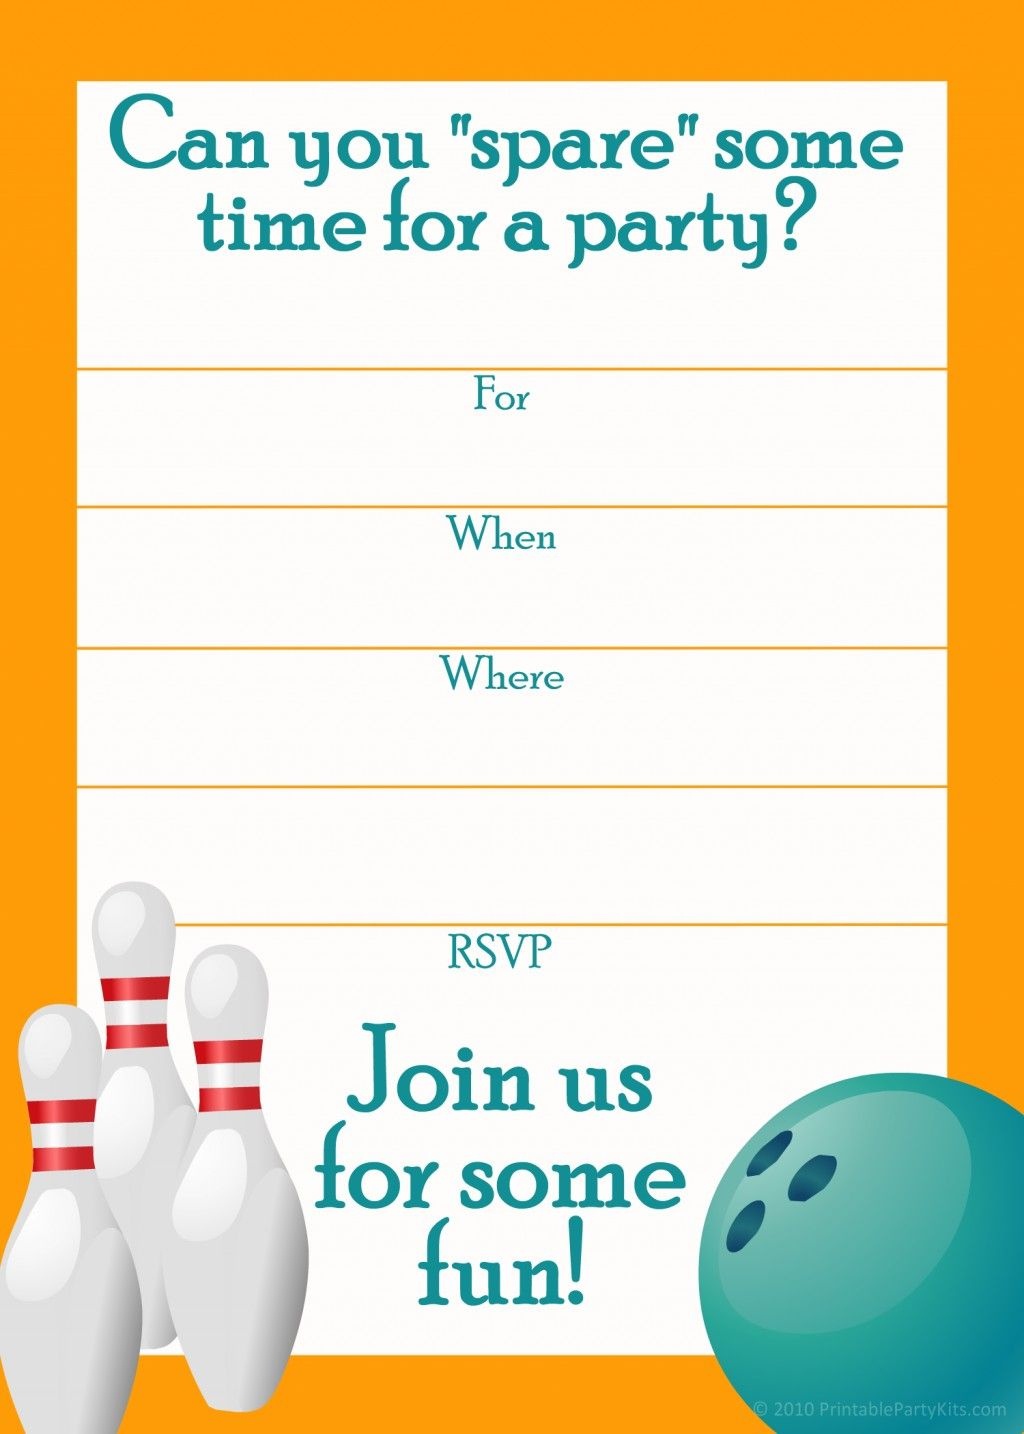 Free Printable Sports Birthday Party Invitations Templates | Dakota - Free Printable Bowling Birthday Party Invitations